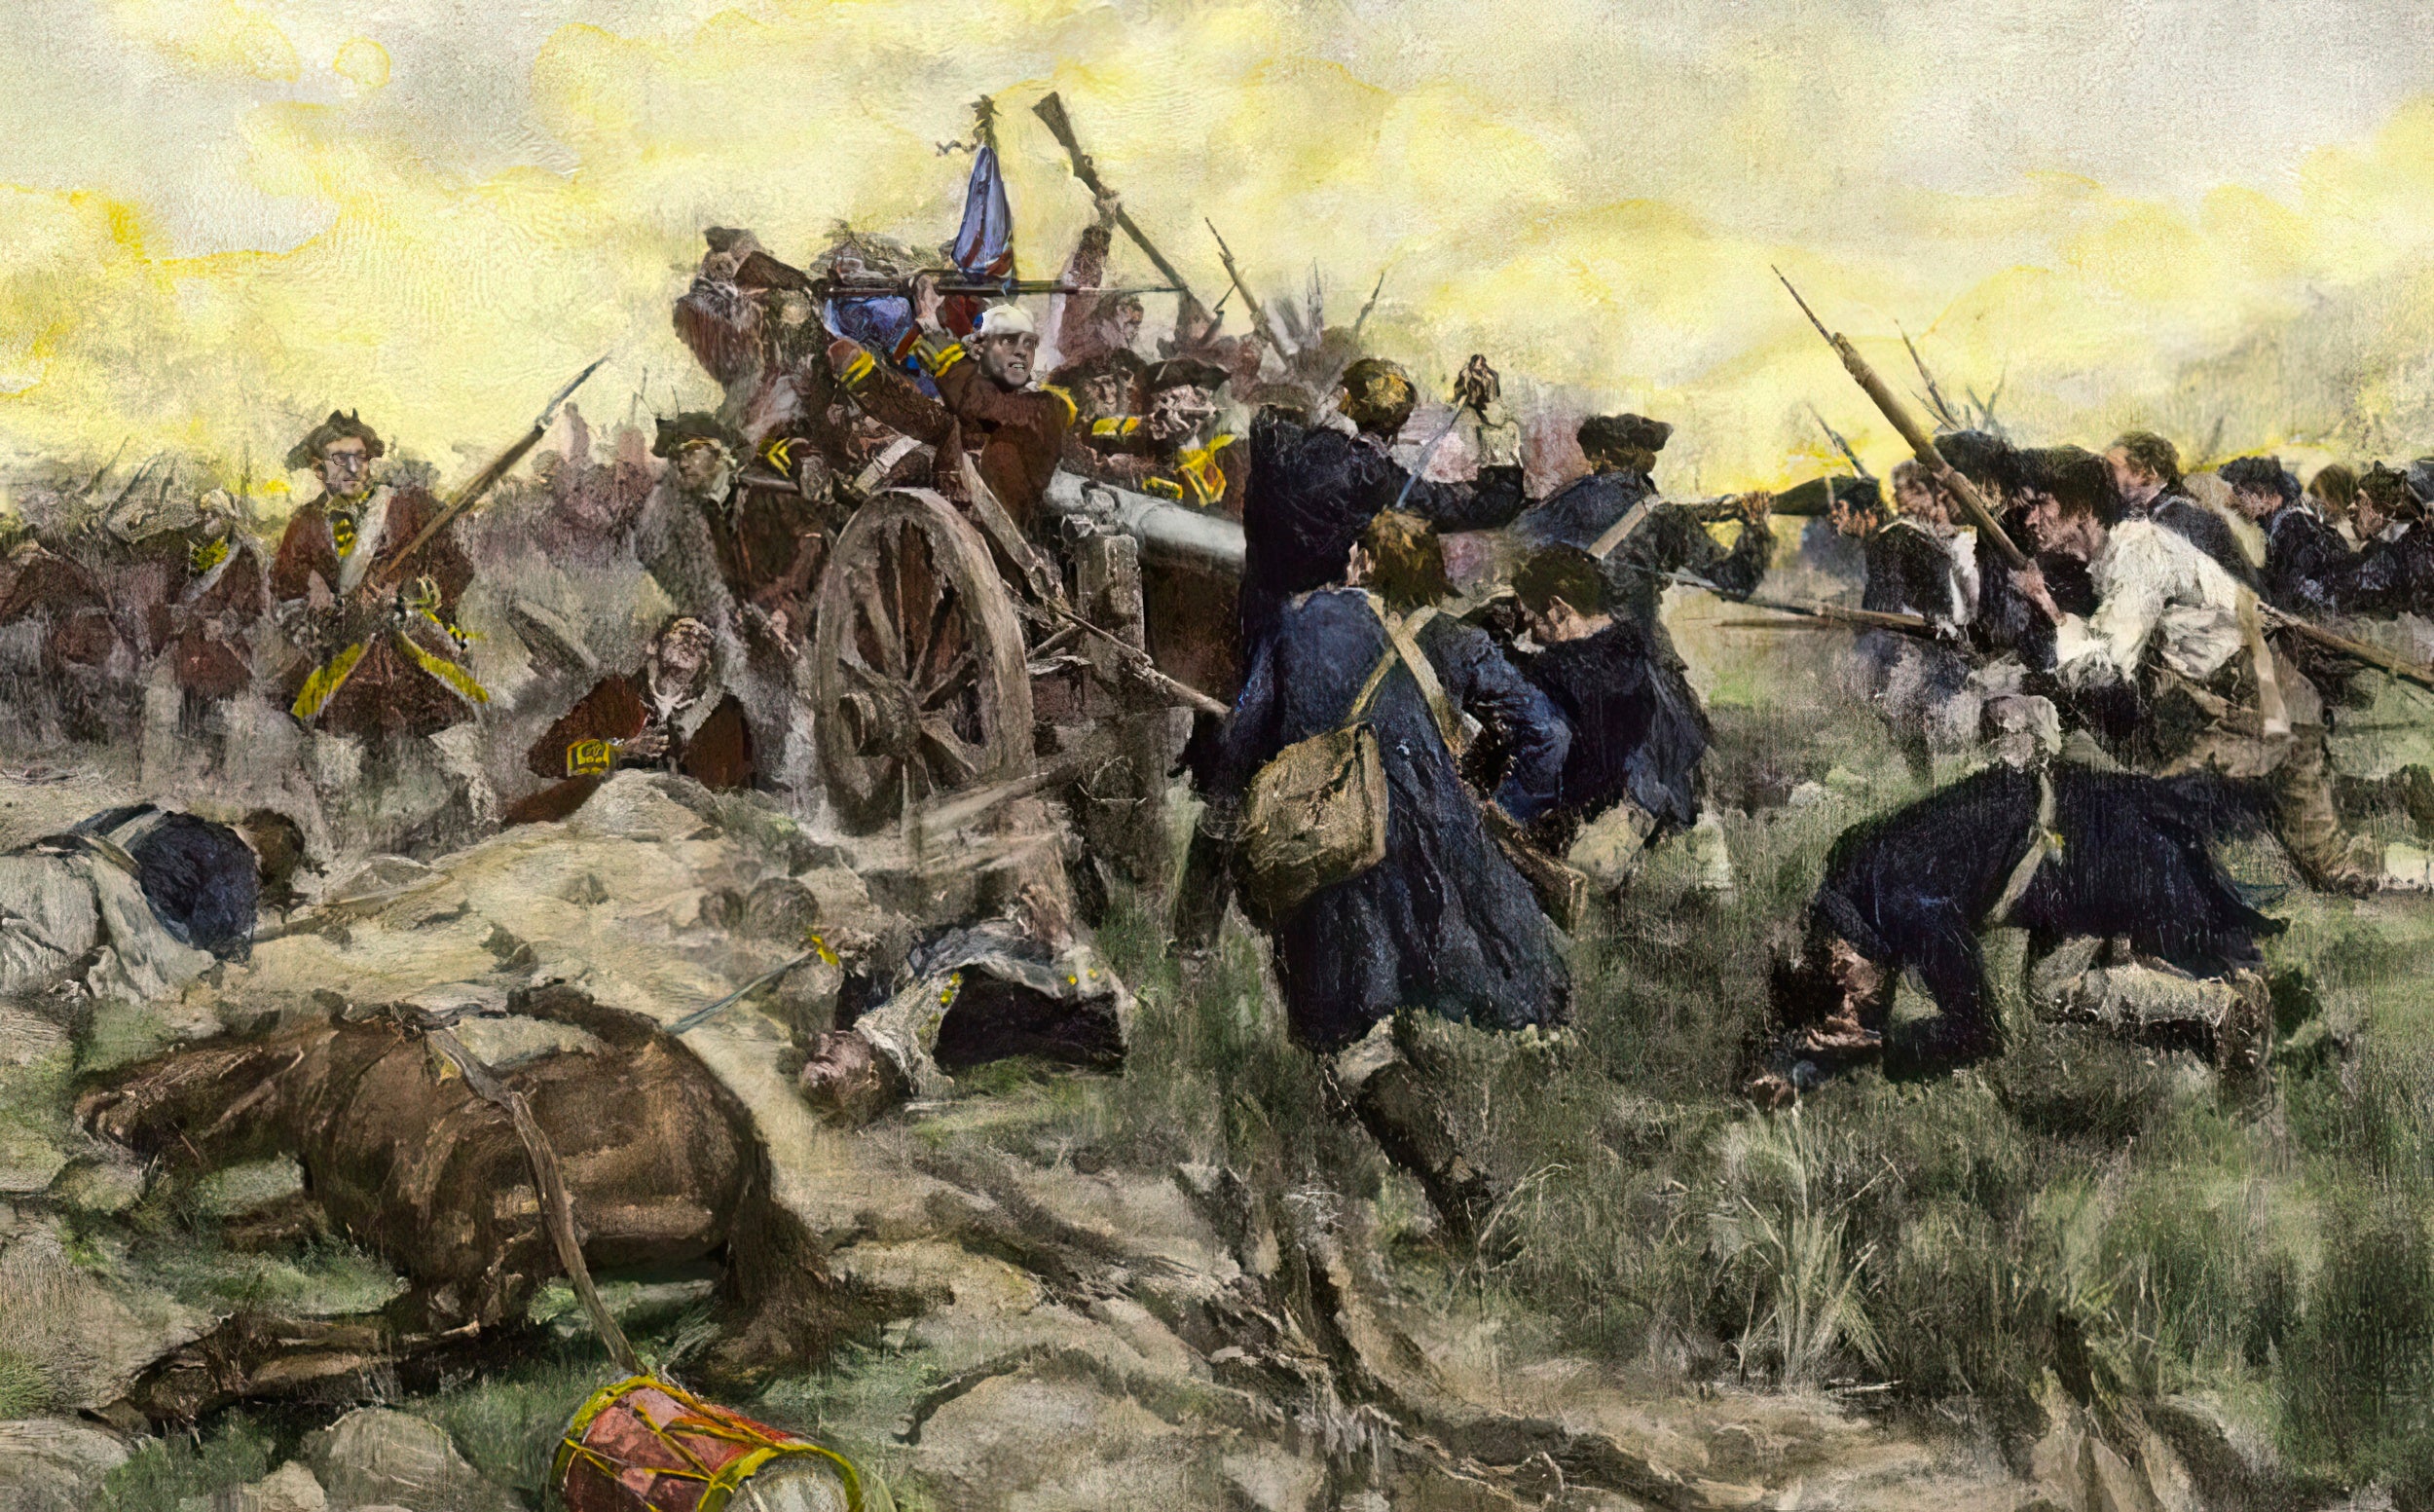 Nathanael Greene: Revolutionary War Hero of the South - Painting